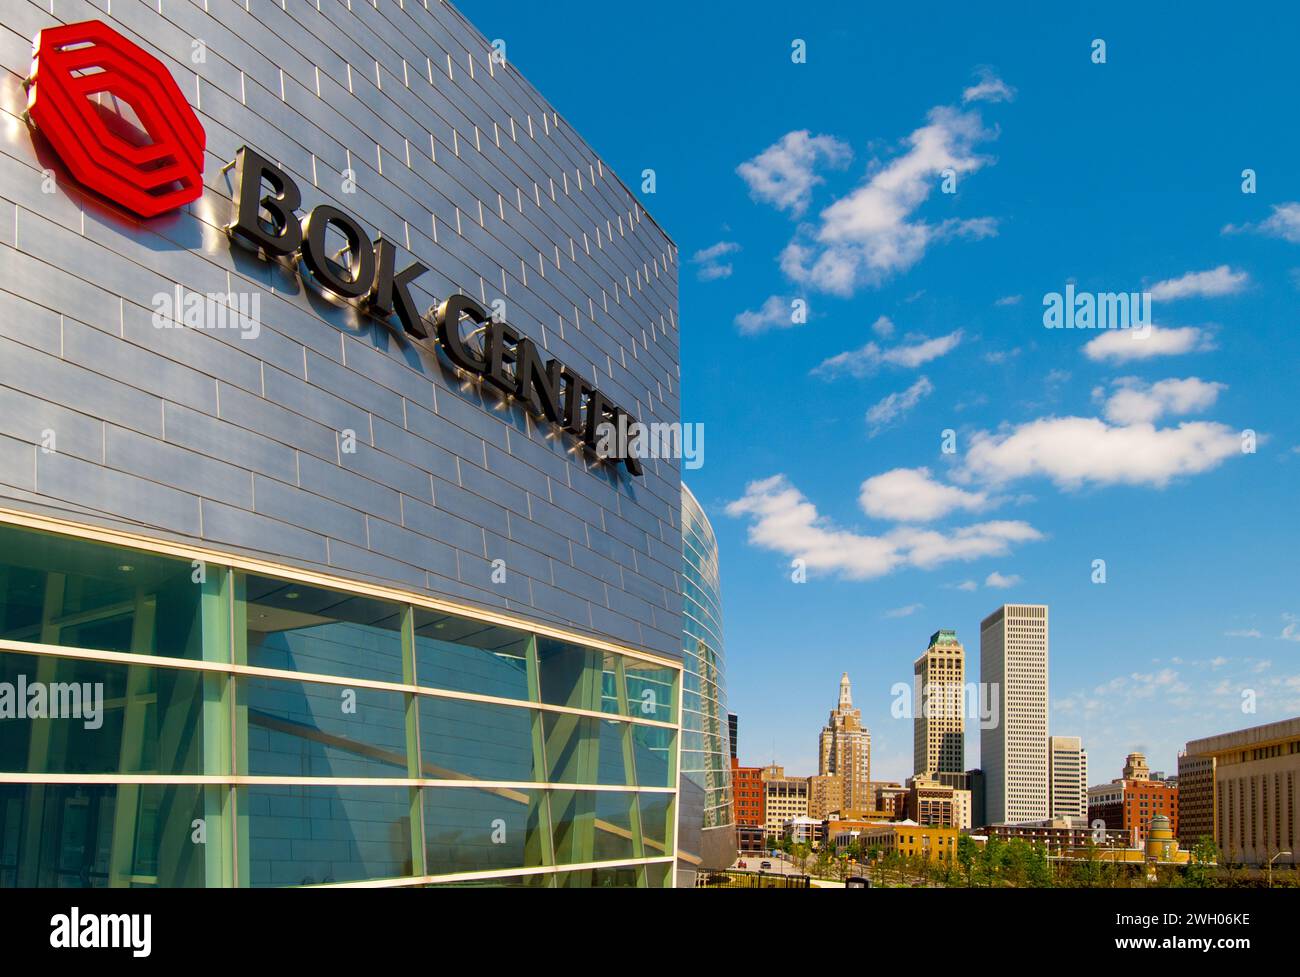 BOK Center Mehrzweckarena (Arena Fußball, Basketball, Hockey und Konzerte) entworfen von Cesar Pelli - Downtown Tulsa, Oklahoma - USA Stockfoto